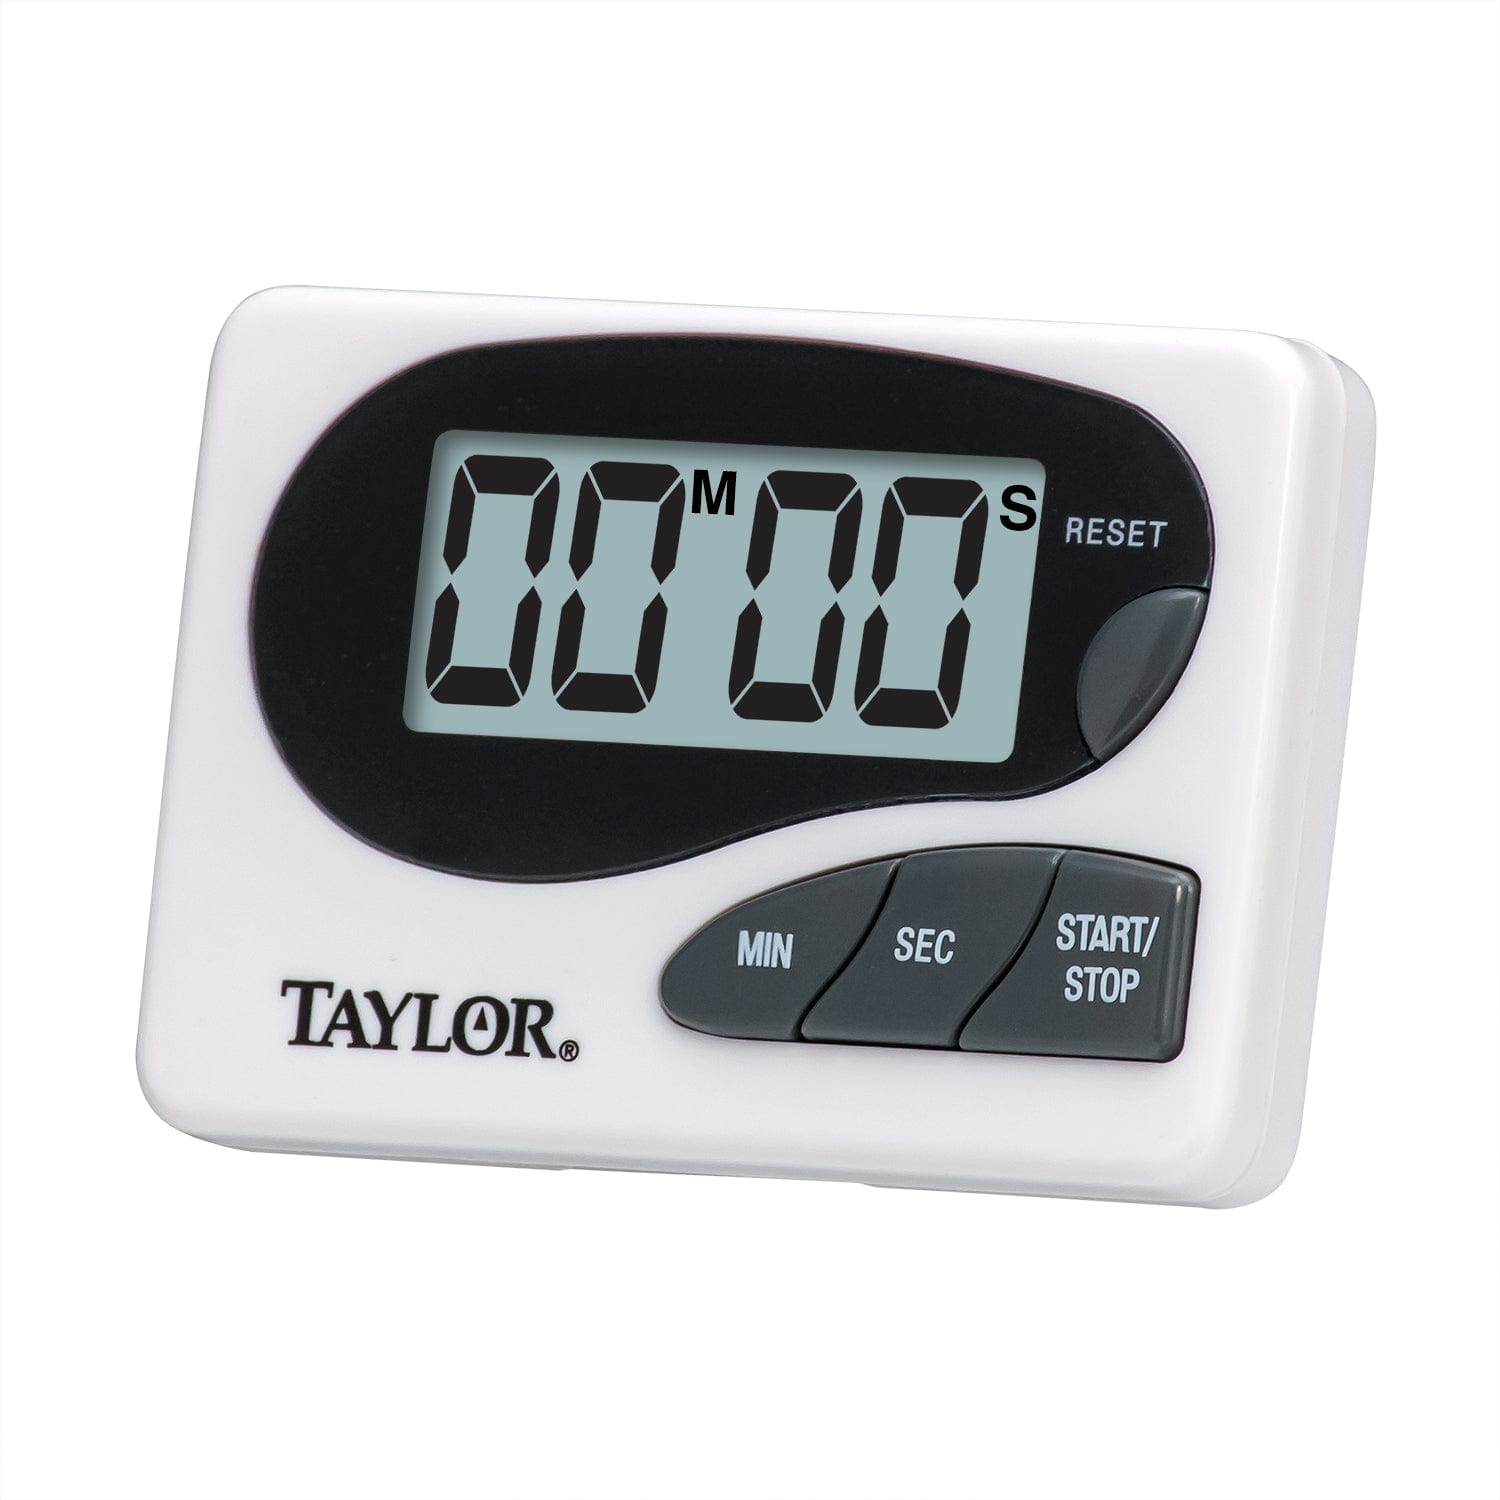 Taylor 5839 Digital Timer